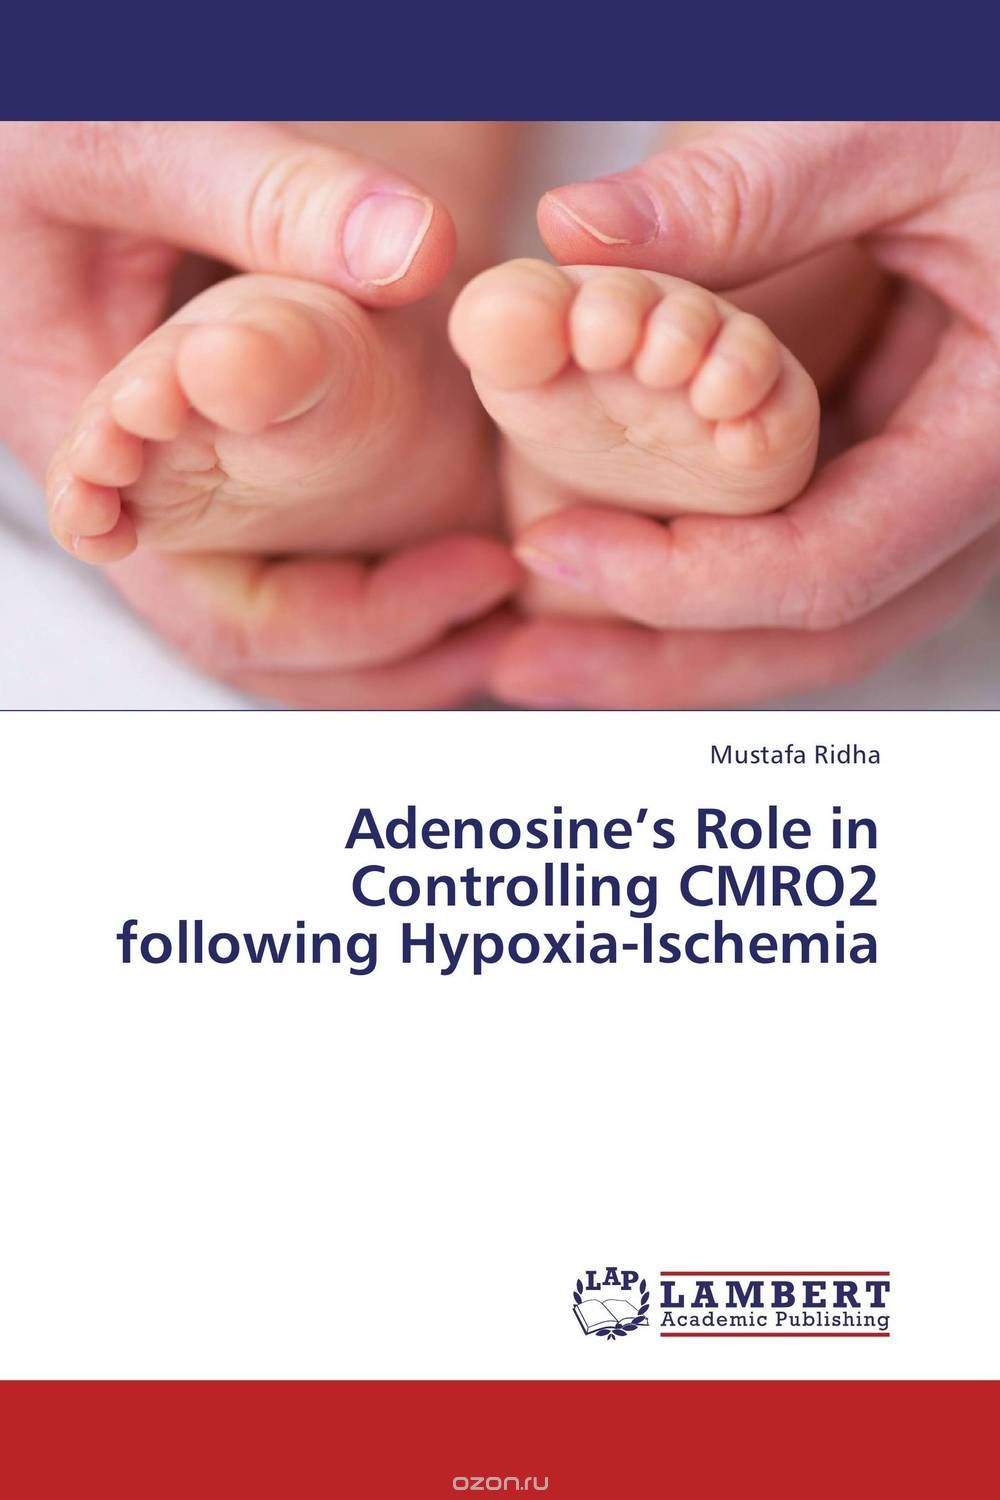 Adenosine’s Role in Controlling CMRO2 following Hypoxia-Ischemia